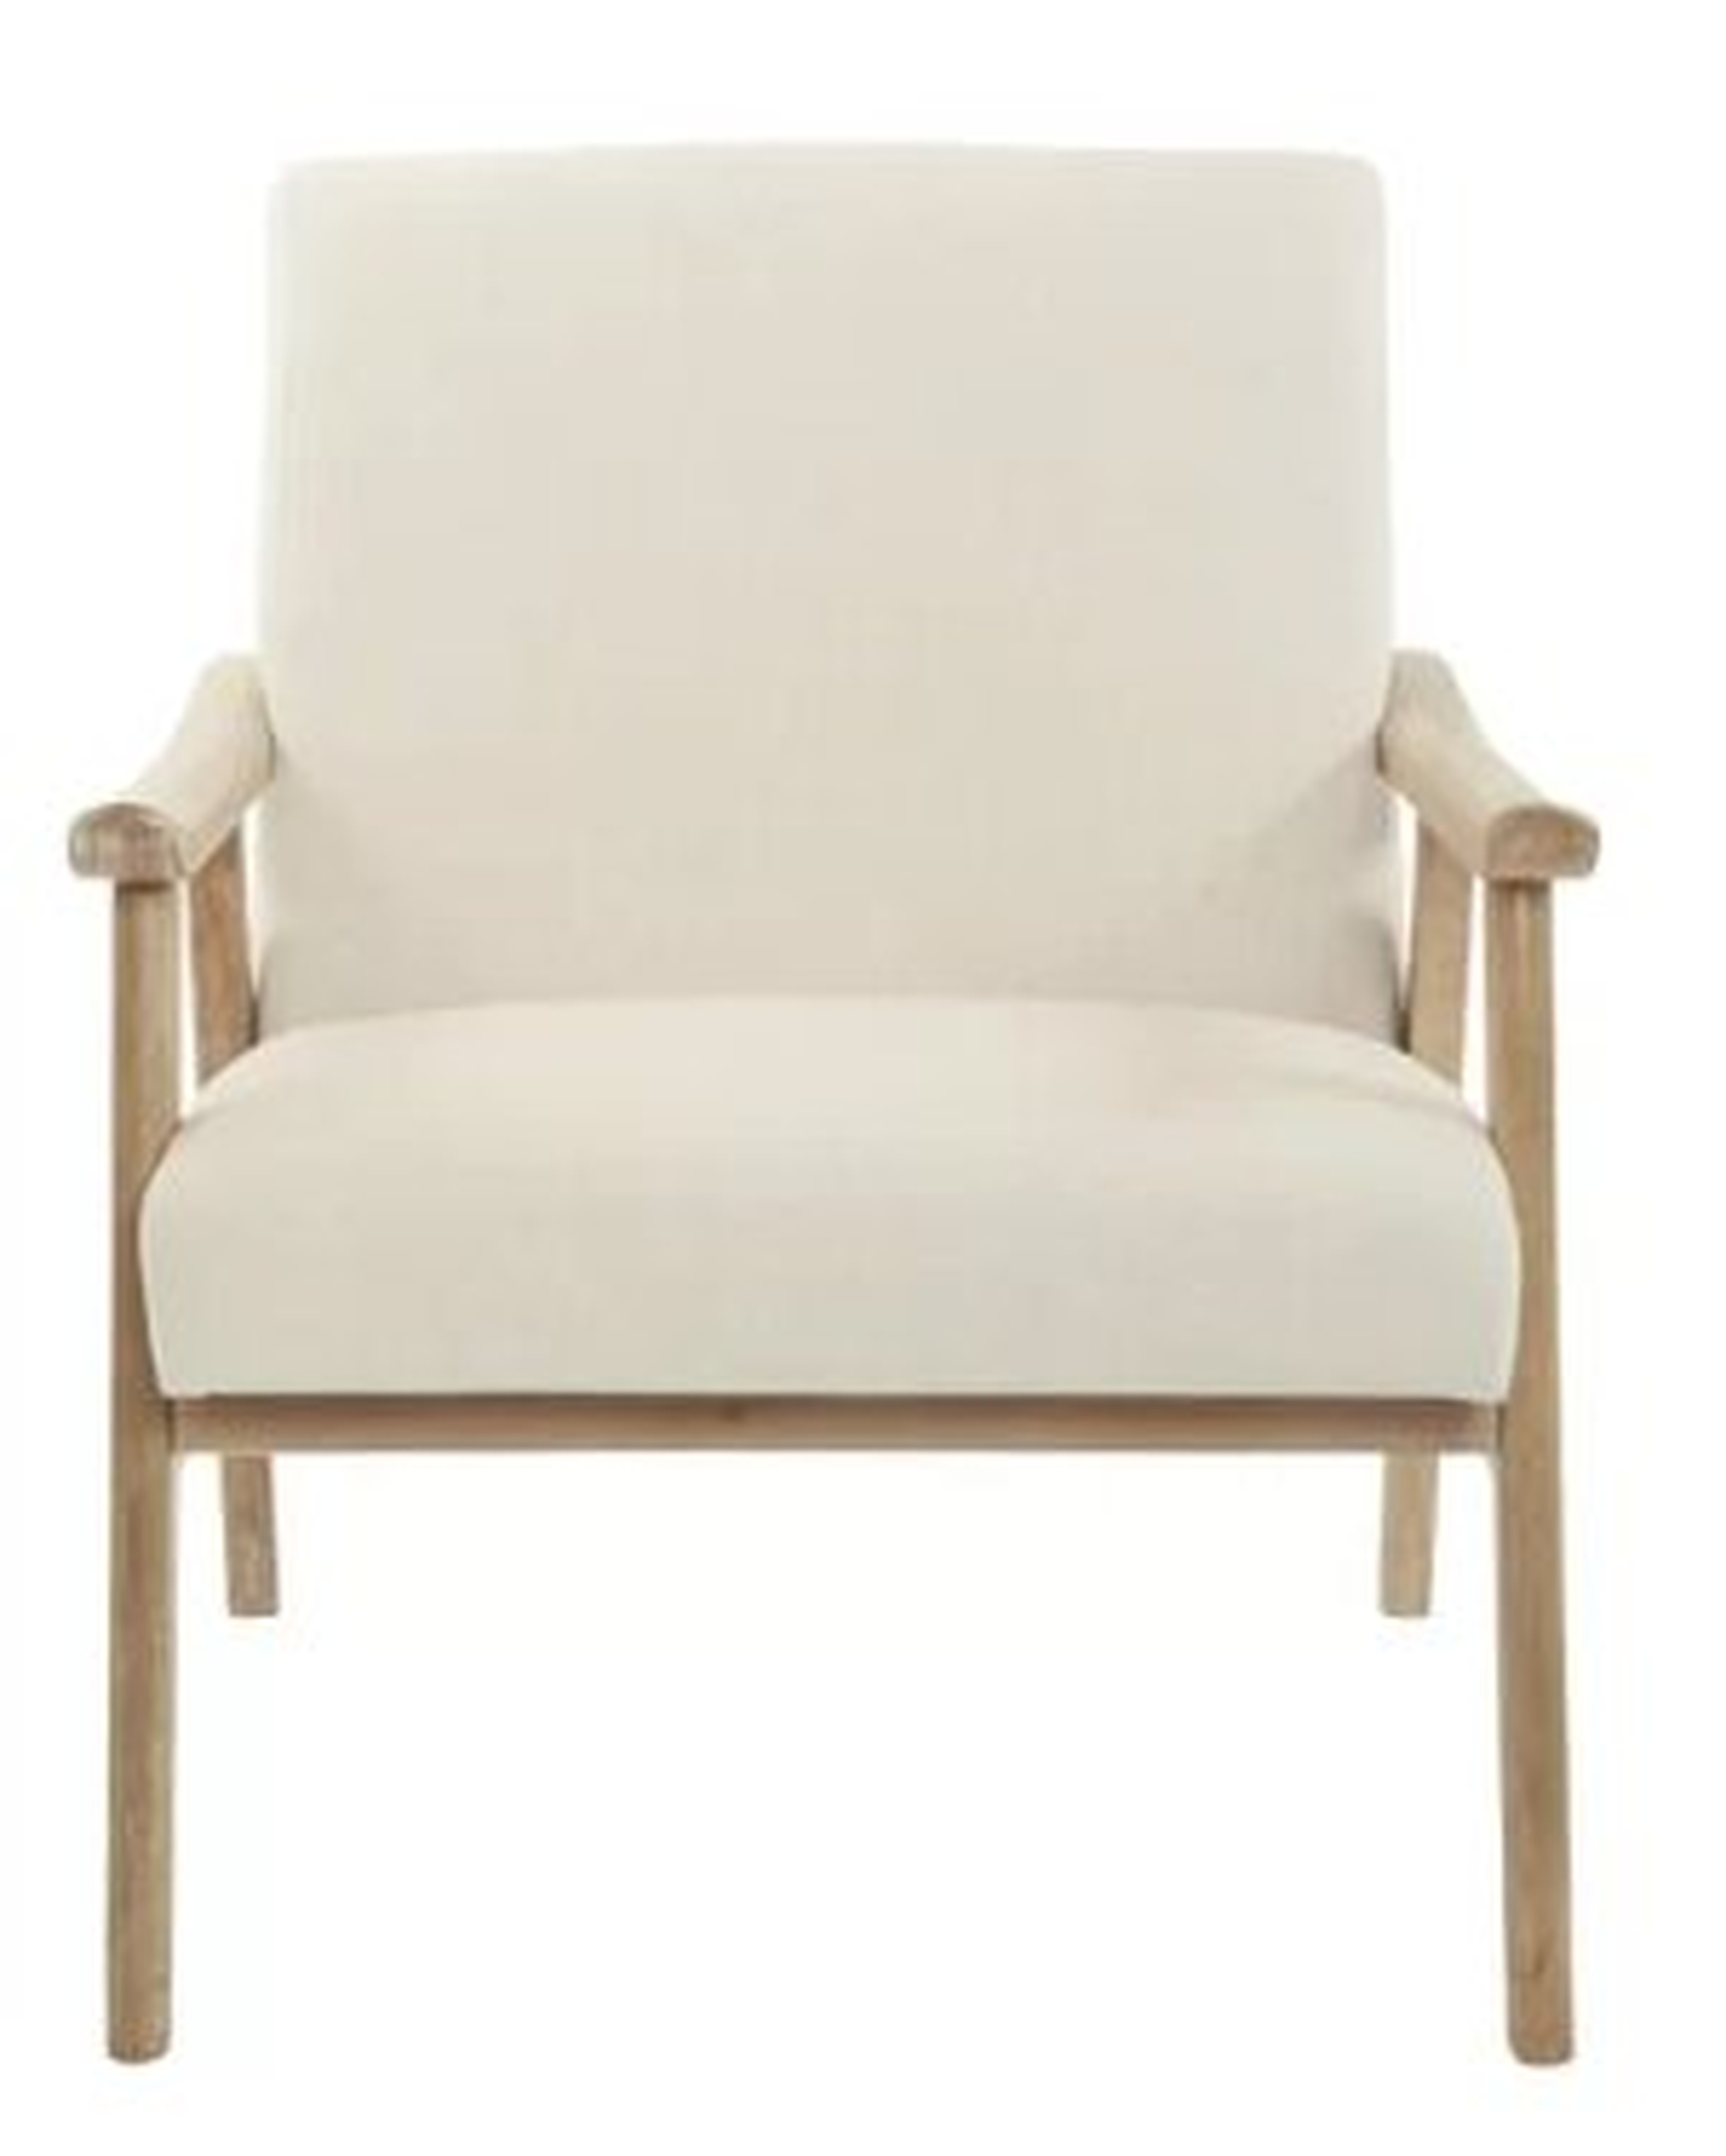 Delasandro Lounge Chair in Linen - Wayfair